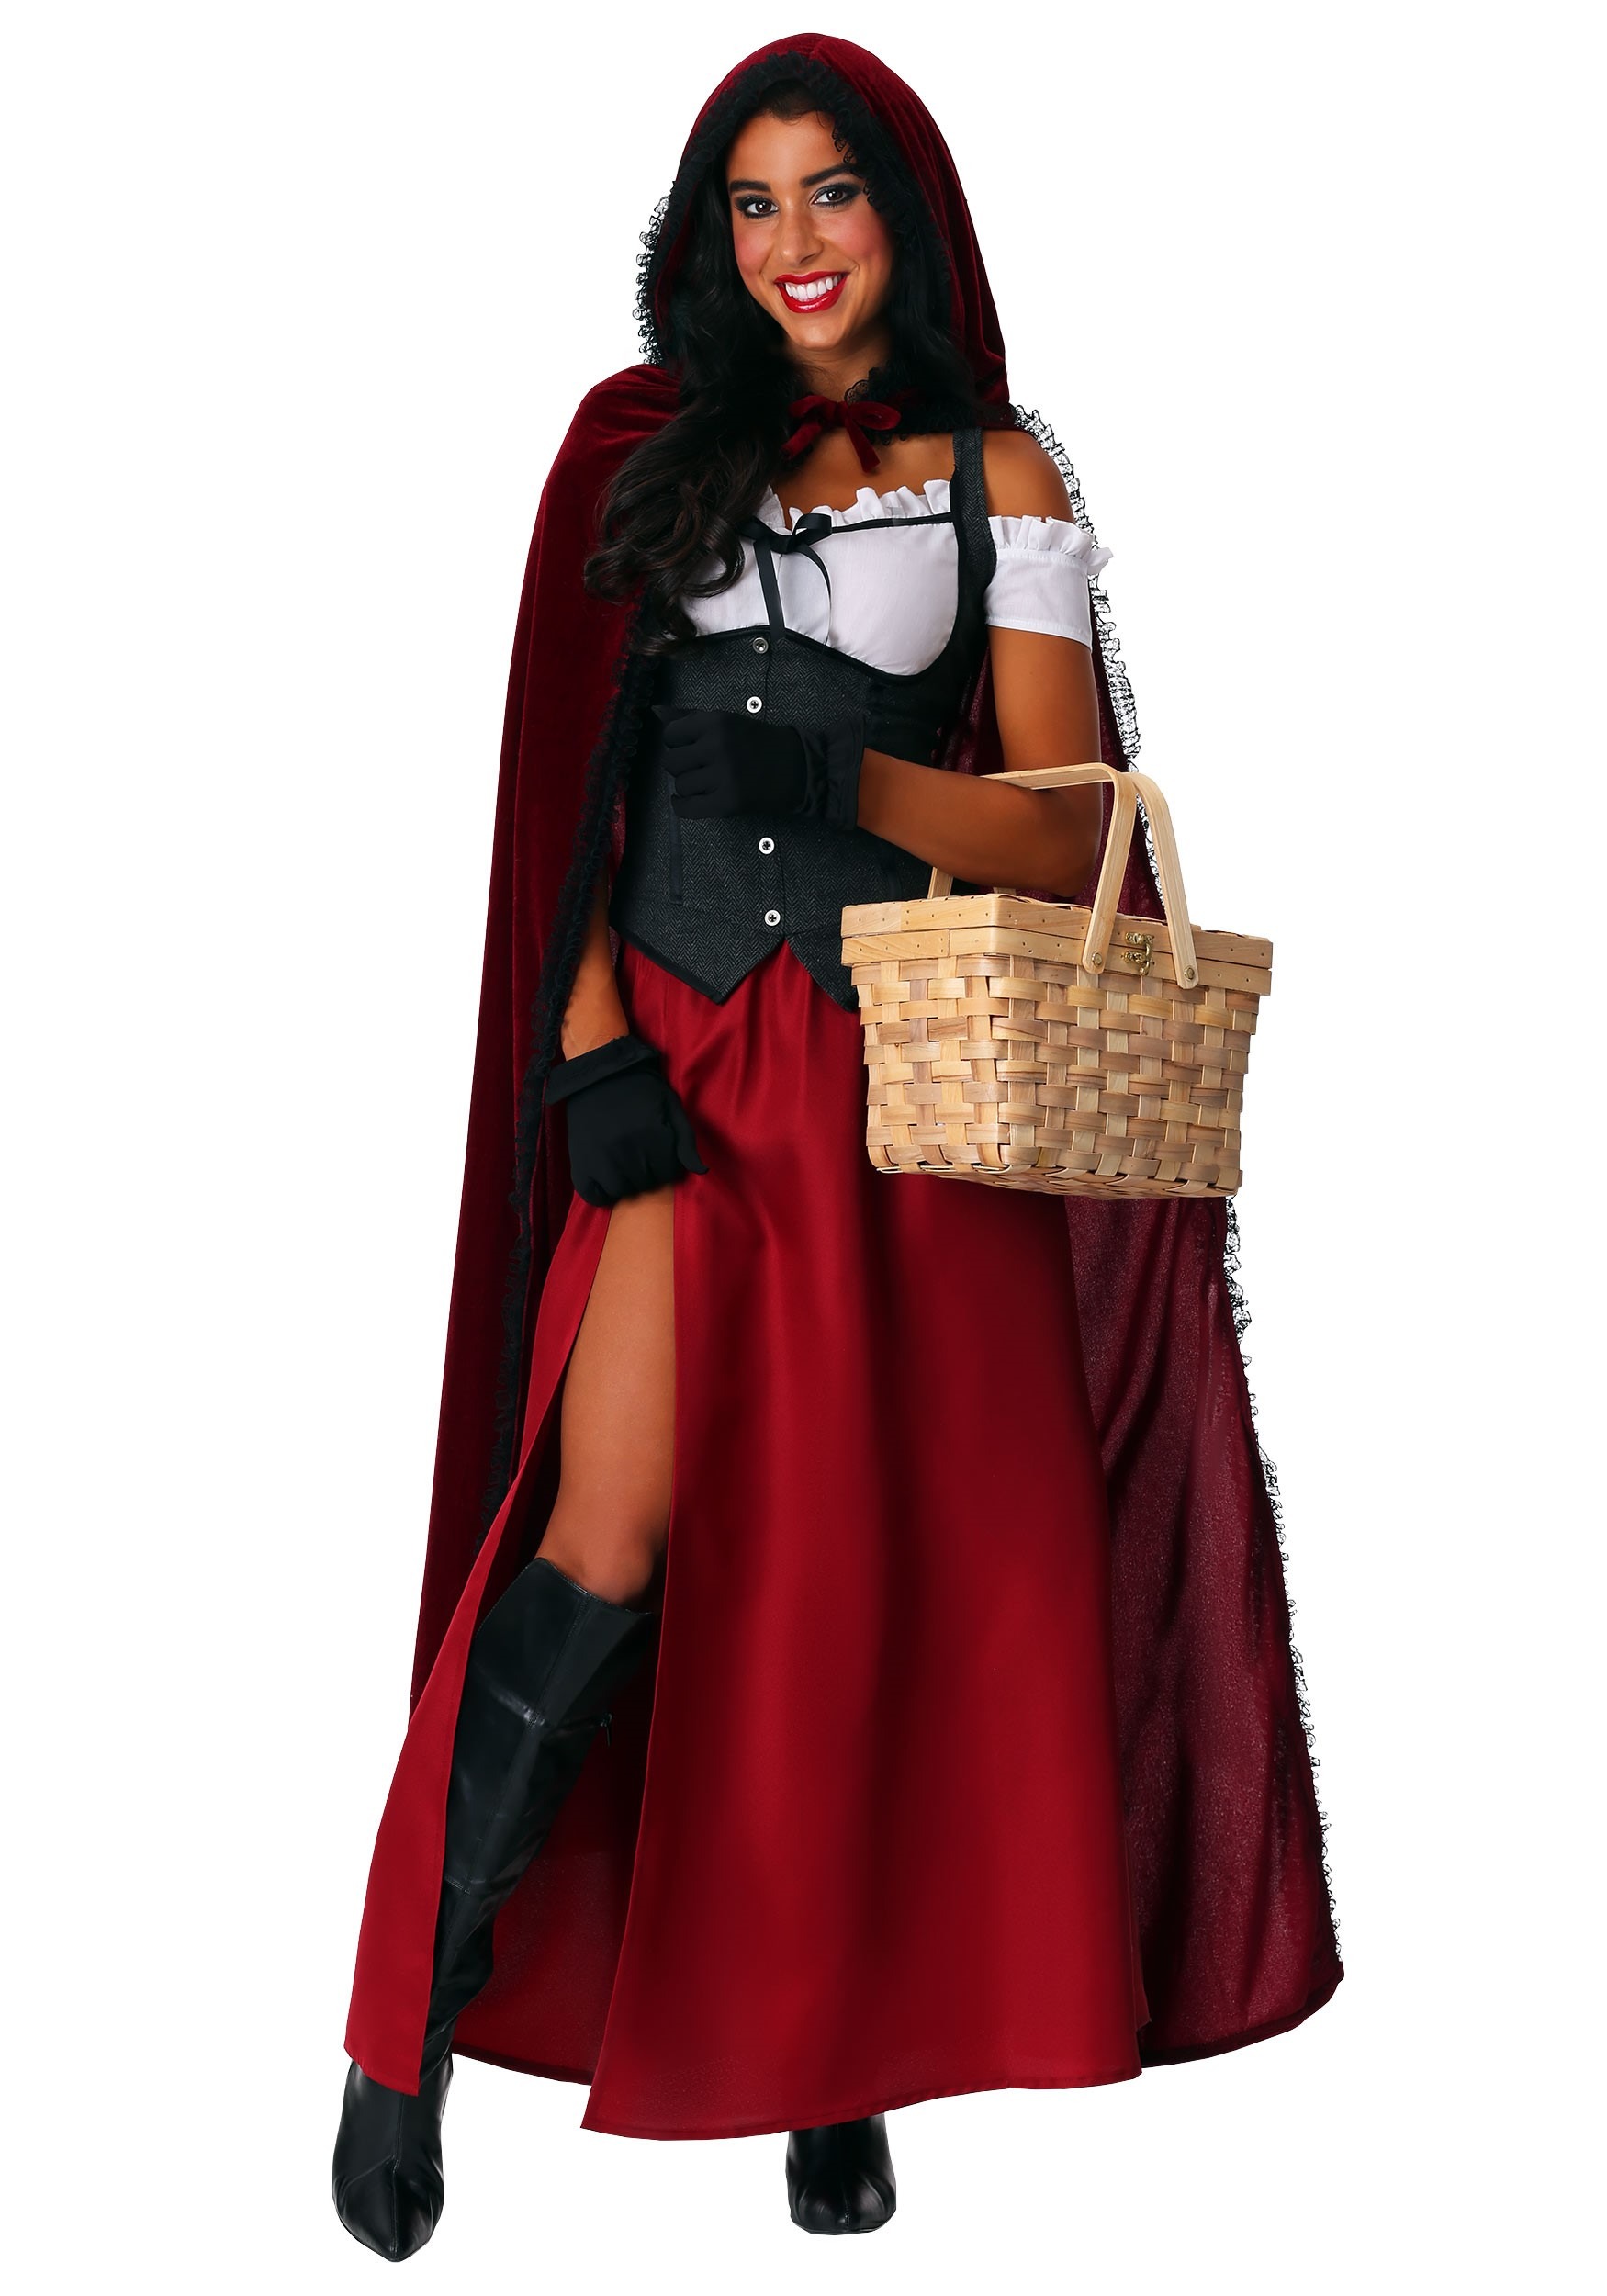 Ravishing Red Riding Hood Women’s Costume